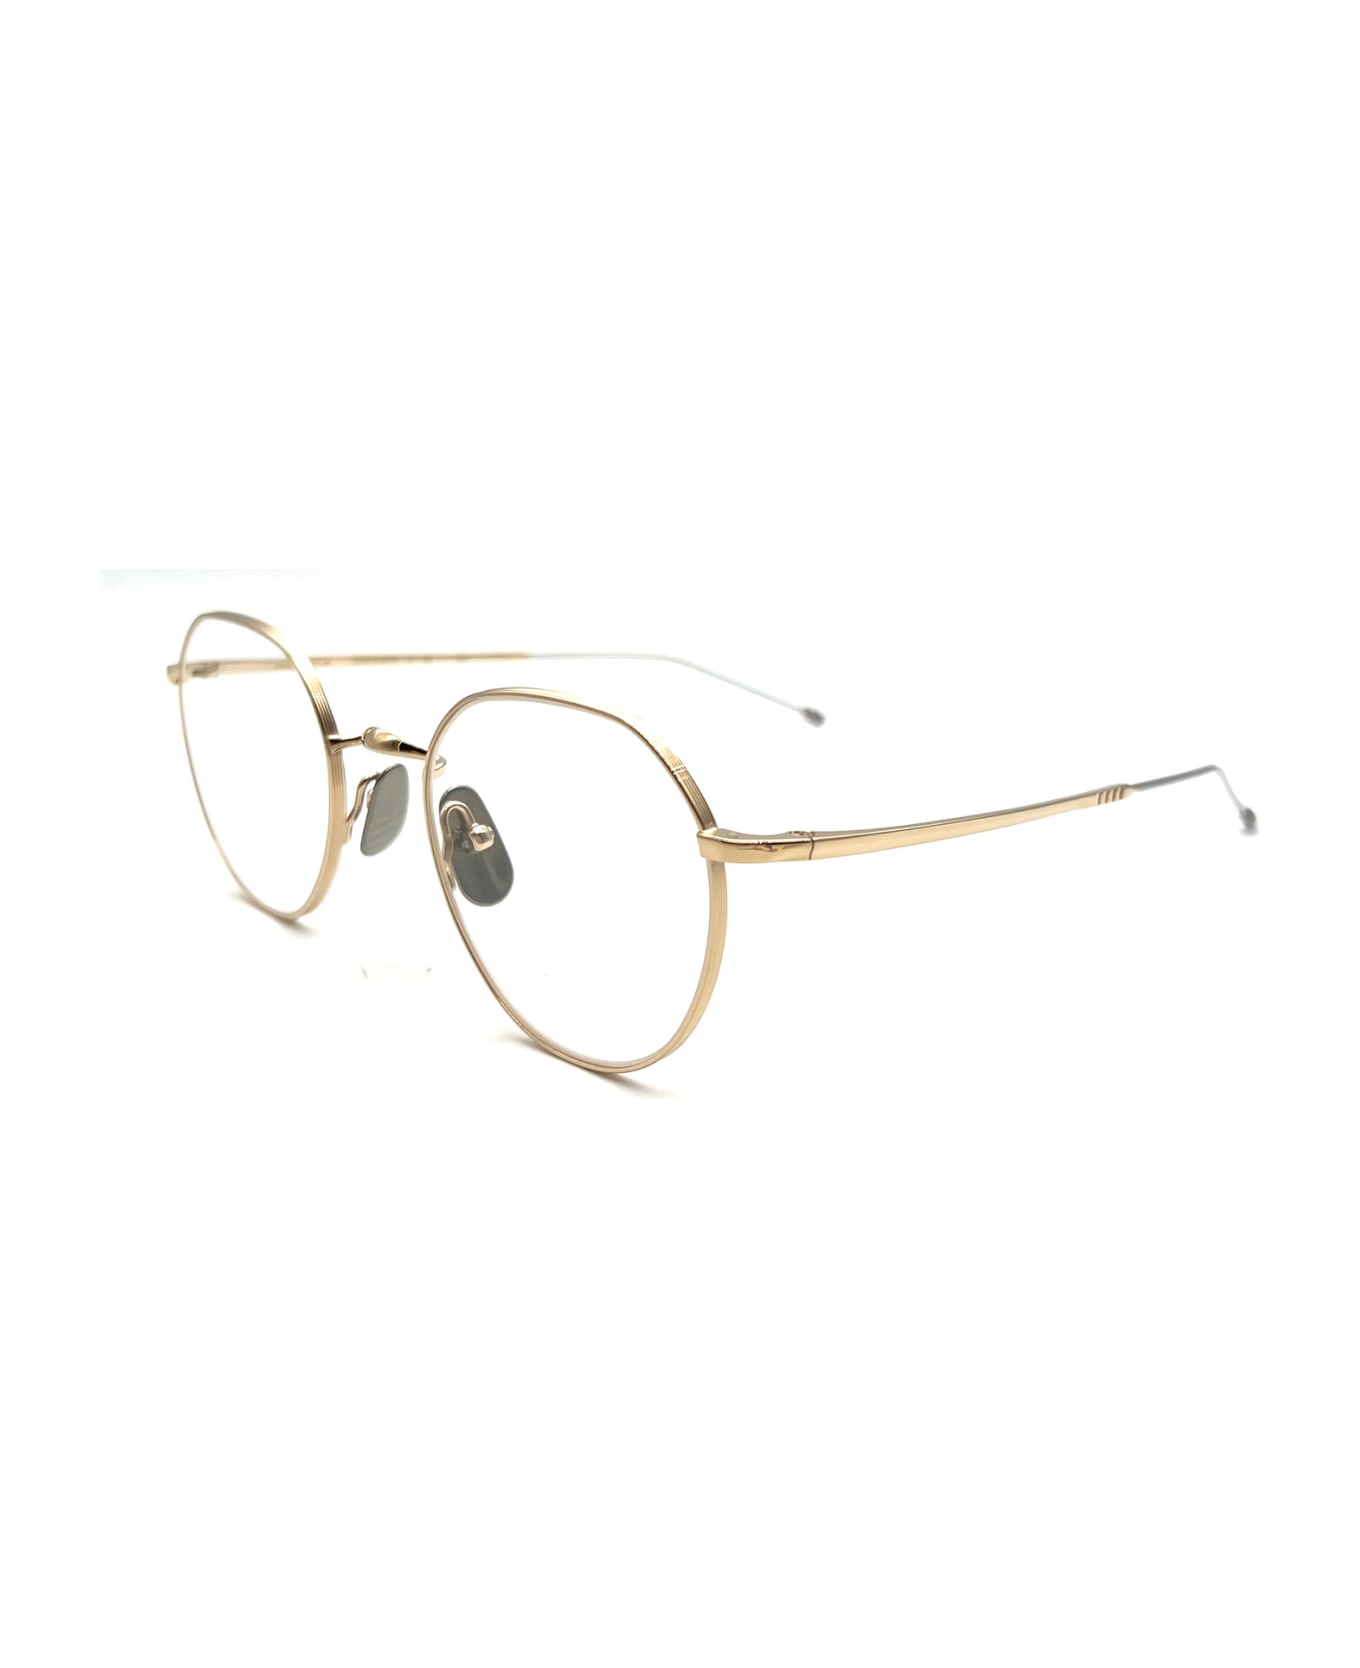 Thom Browne UEO914A/G0001 Eyewear - White Gold アイウェア